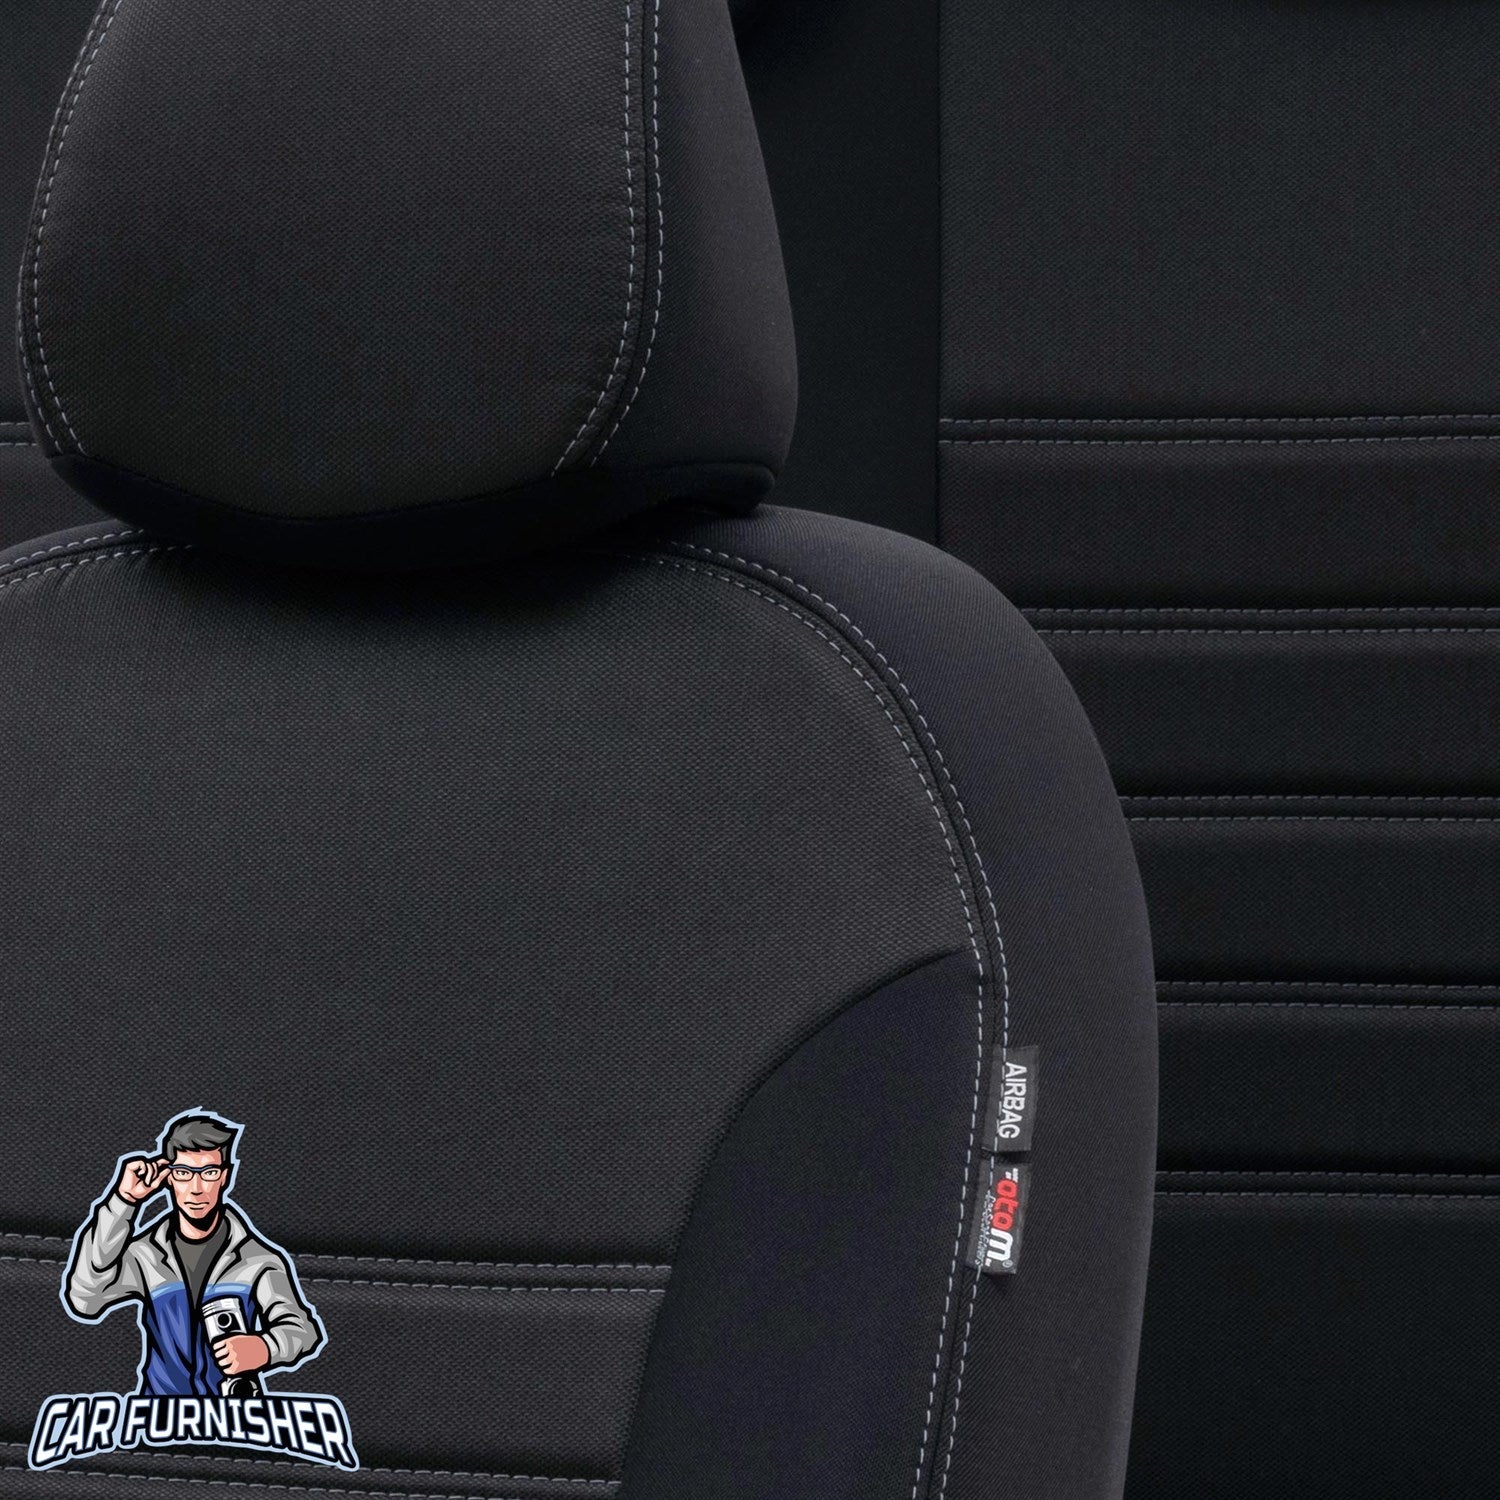 Ford Galaxy Seat Covers Original Jacquard Design Black Jacquard Fabric